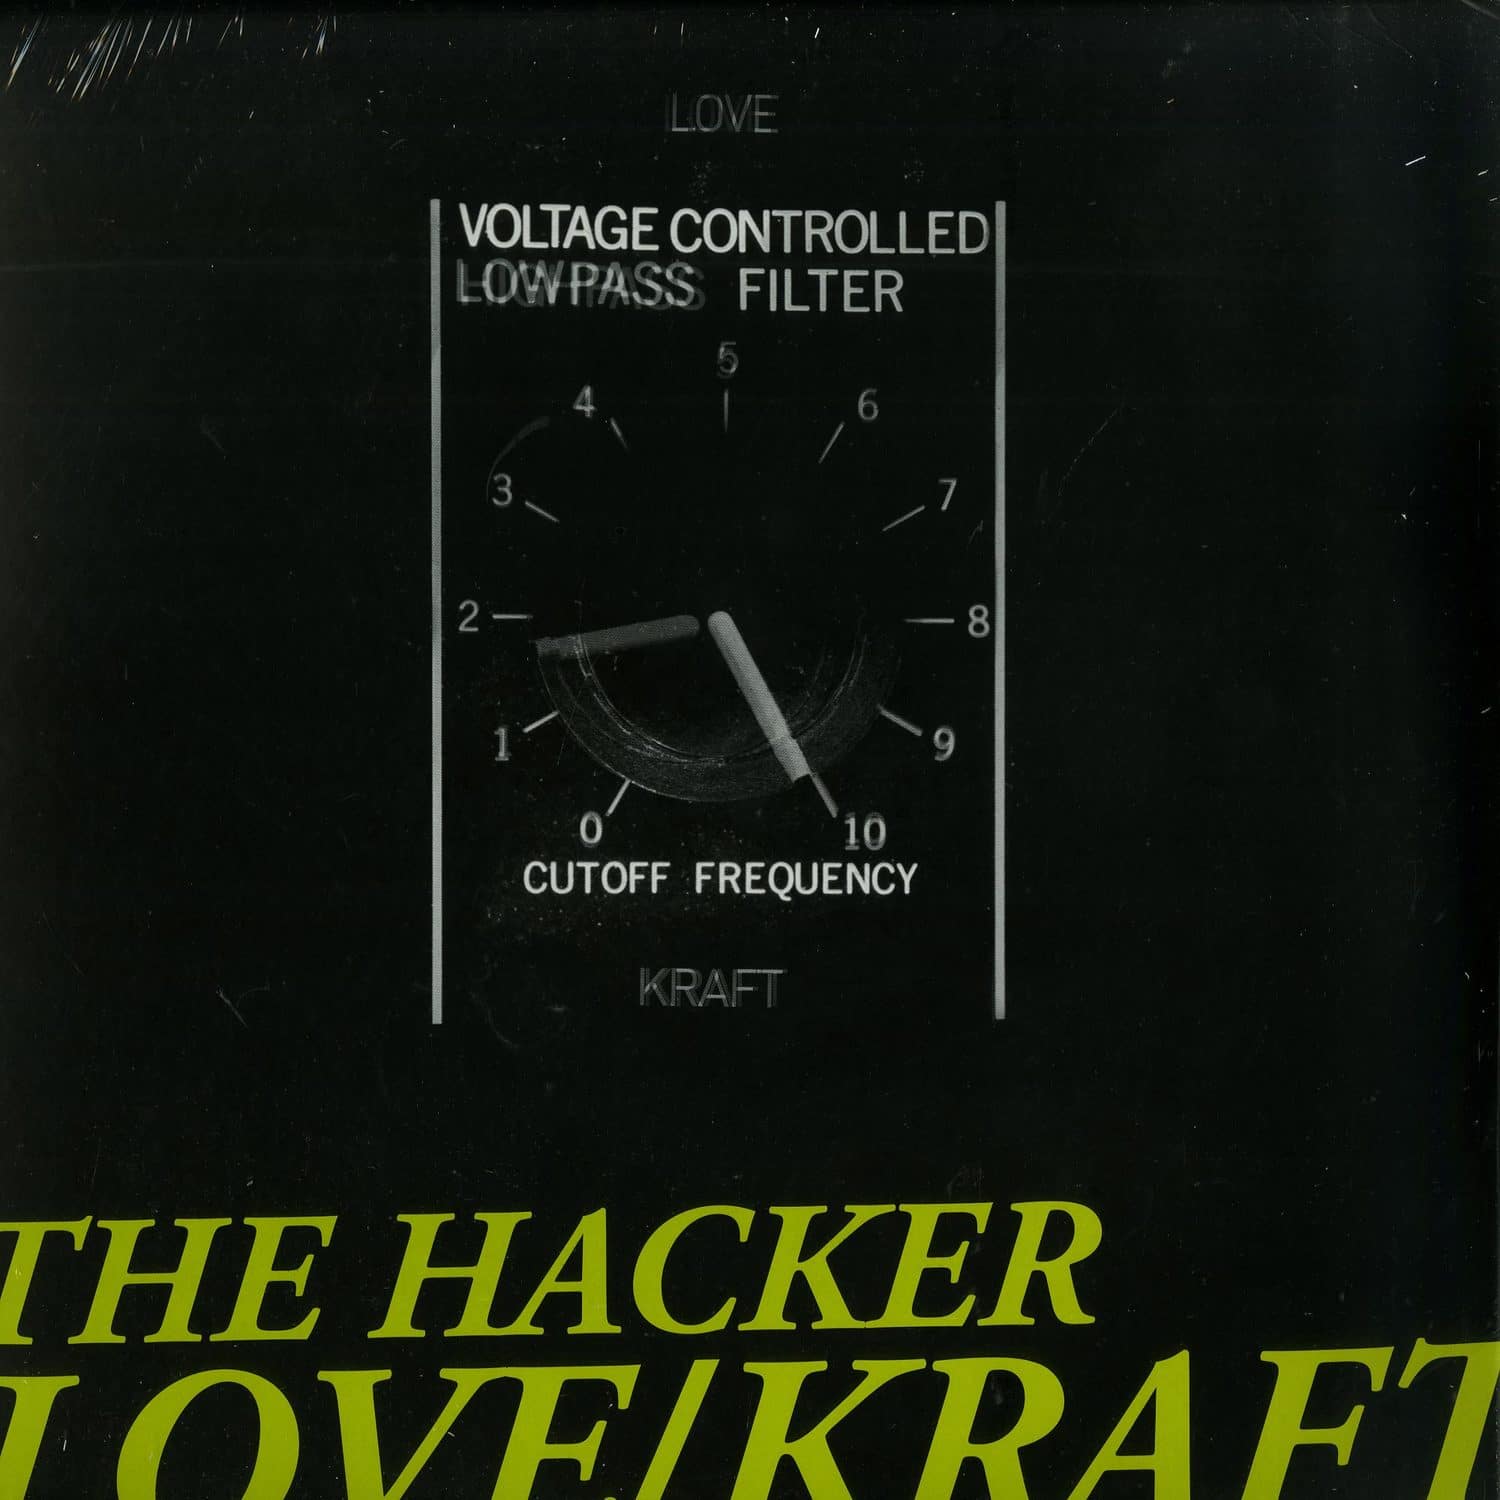 The Hacker - LOVE/ KRAFT PART 2 